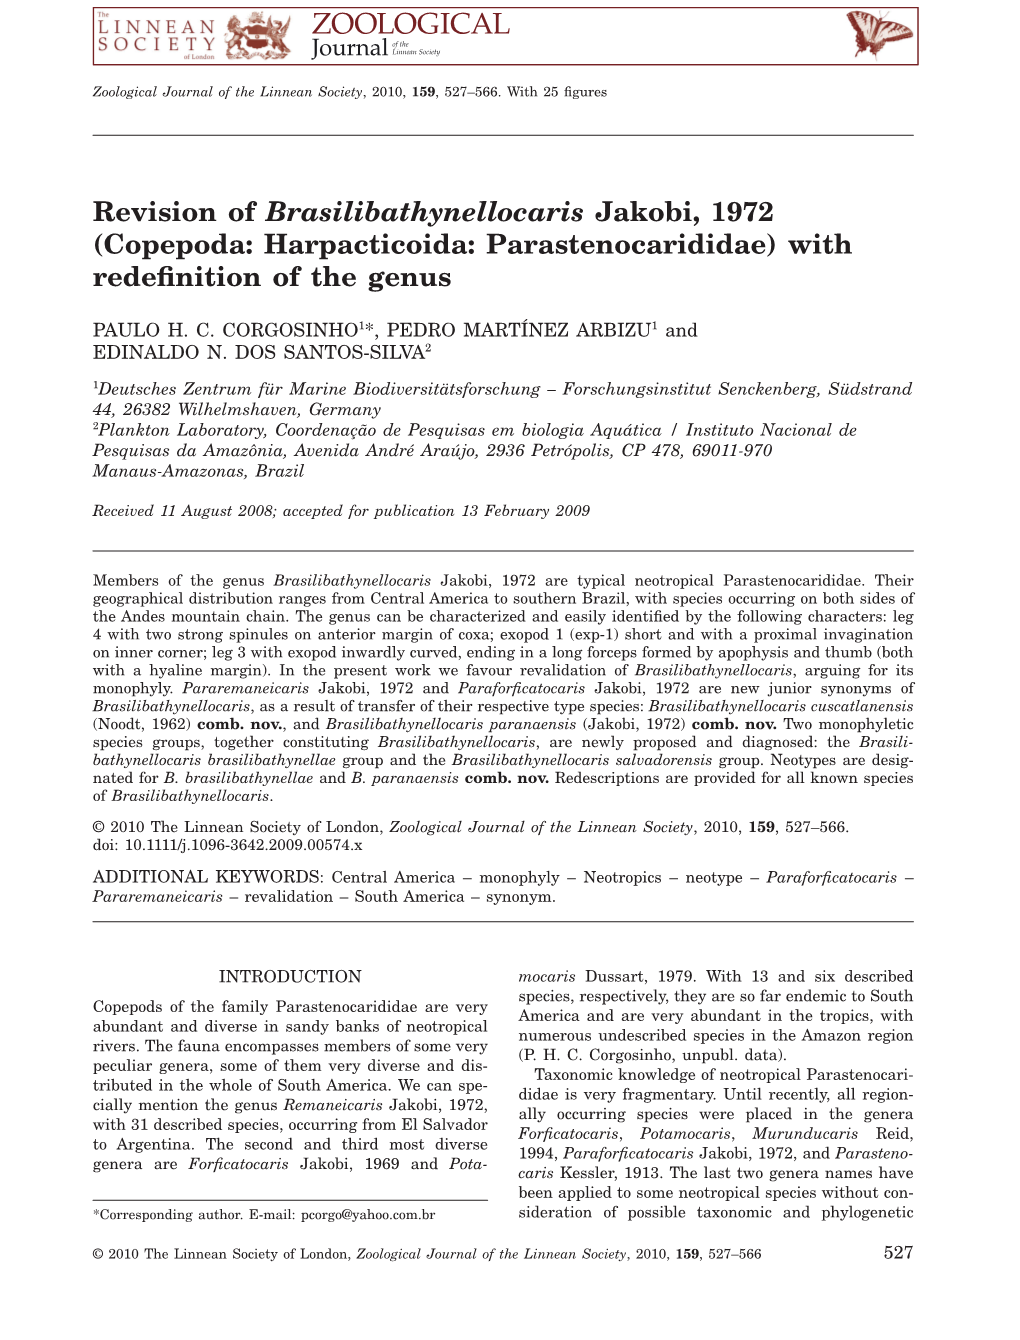 Revision of Brasilibathynellocaris Jakobi, 1972 (Copepoda: Harpacticoida: Parastenocarididae) with Redefinition of the Genus